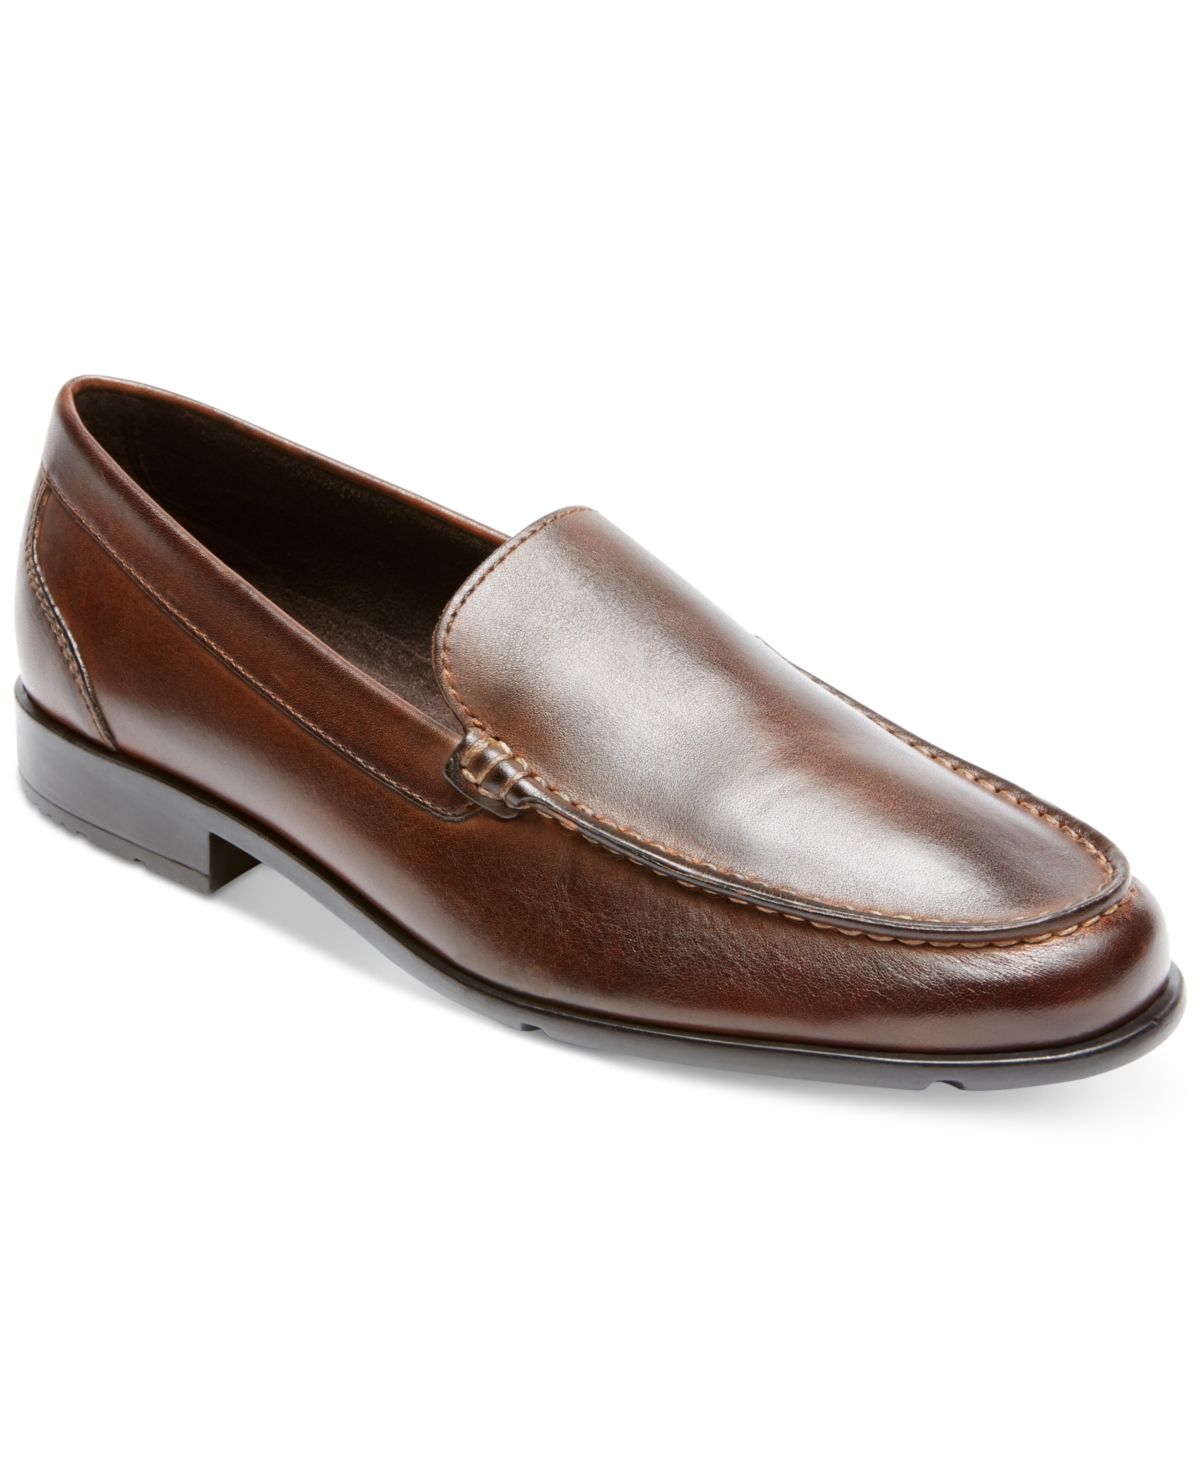 Men's Classic Venetian Loafer Shoes - Dark Brown